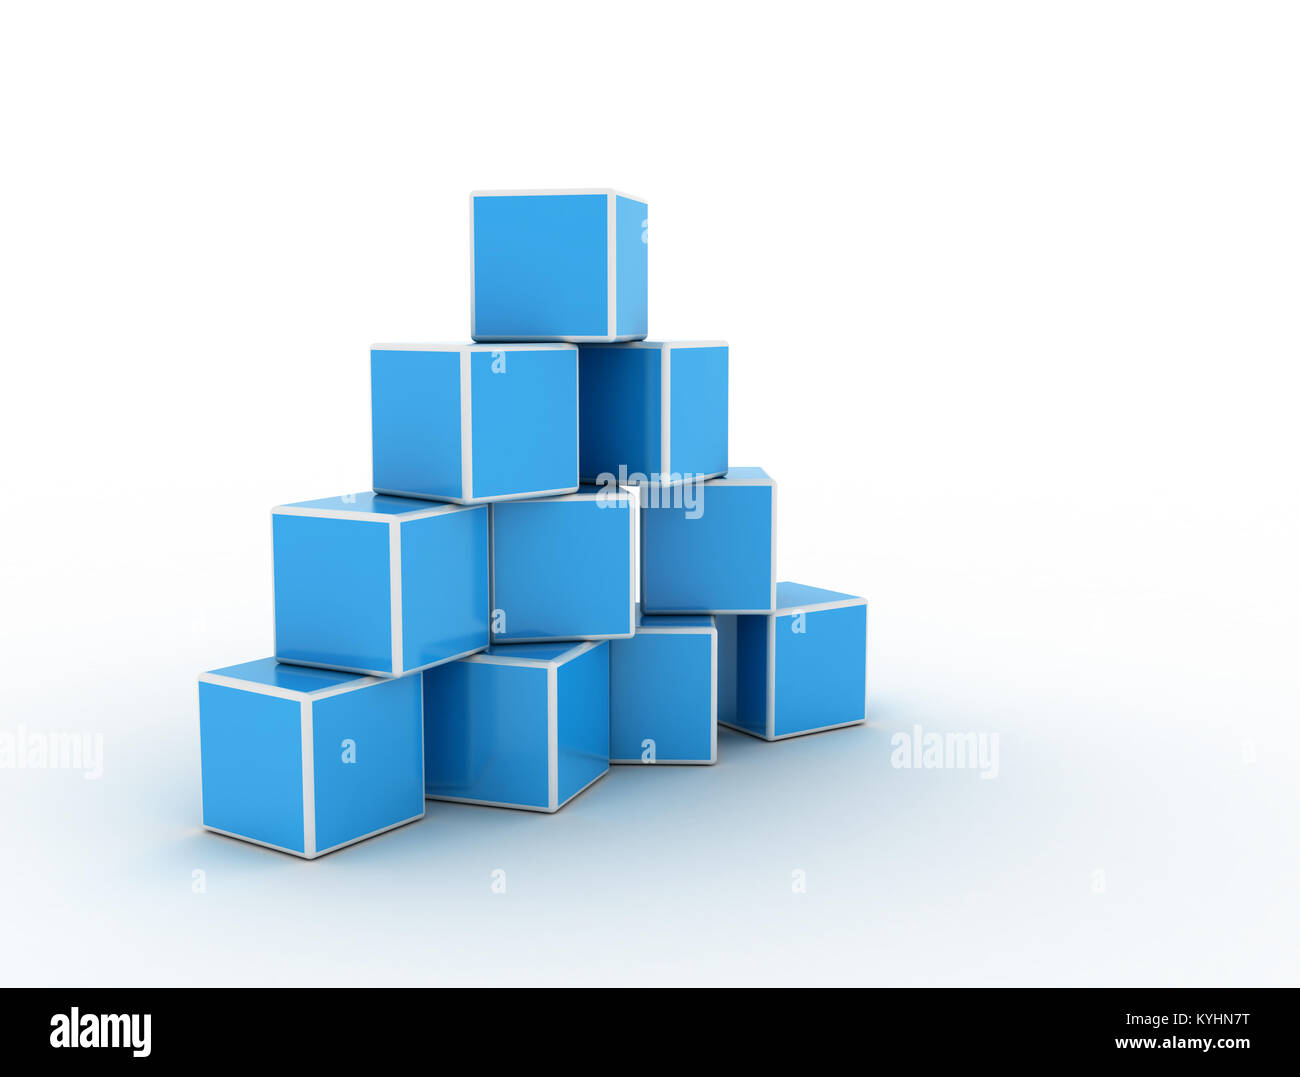 Cubes stack pyramid shape on white background Stock Photo